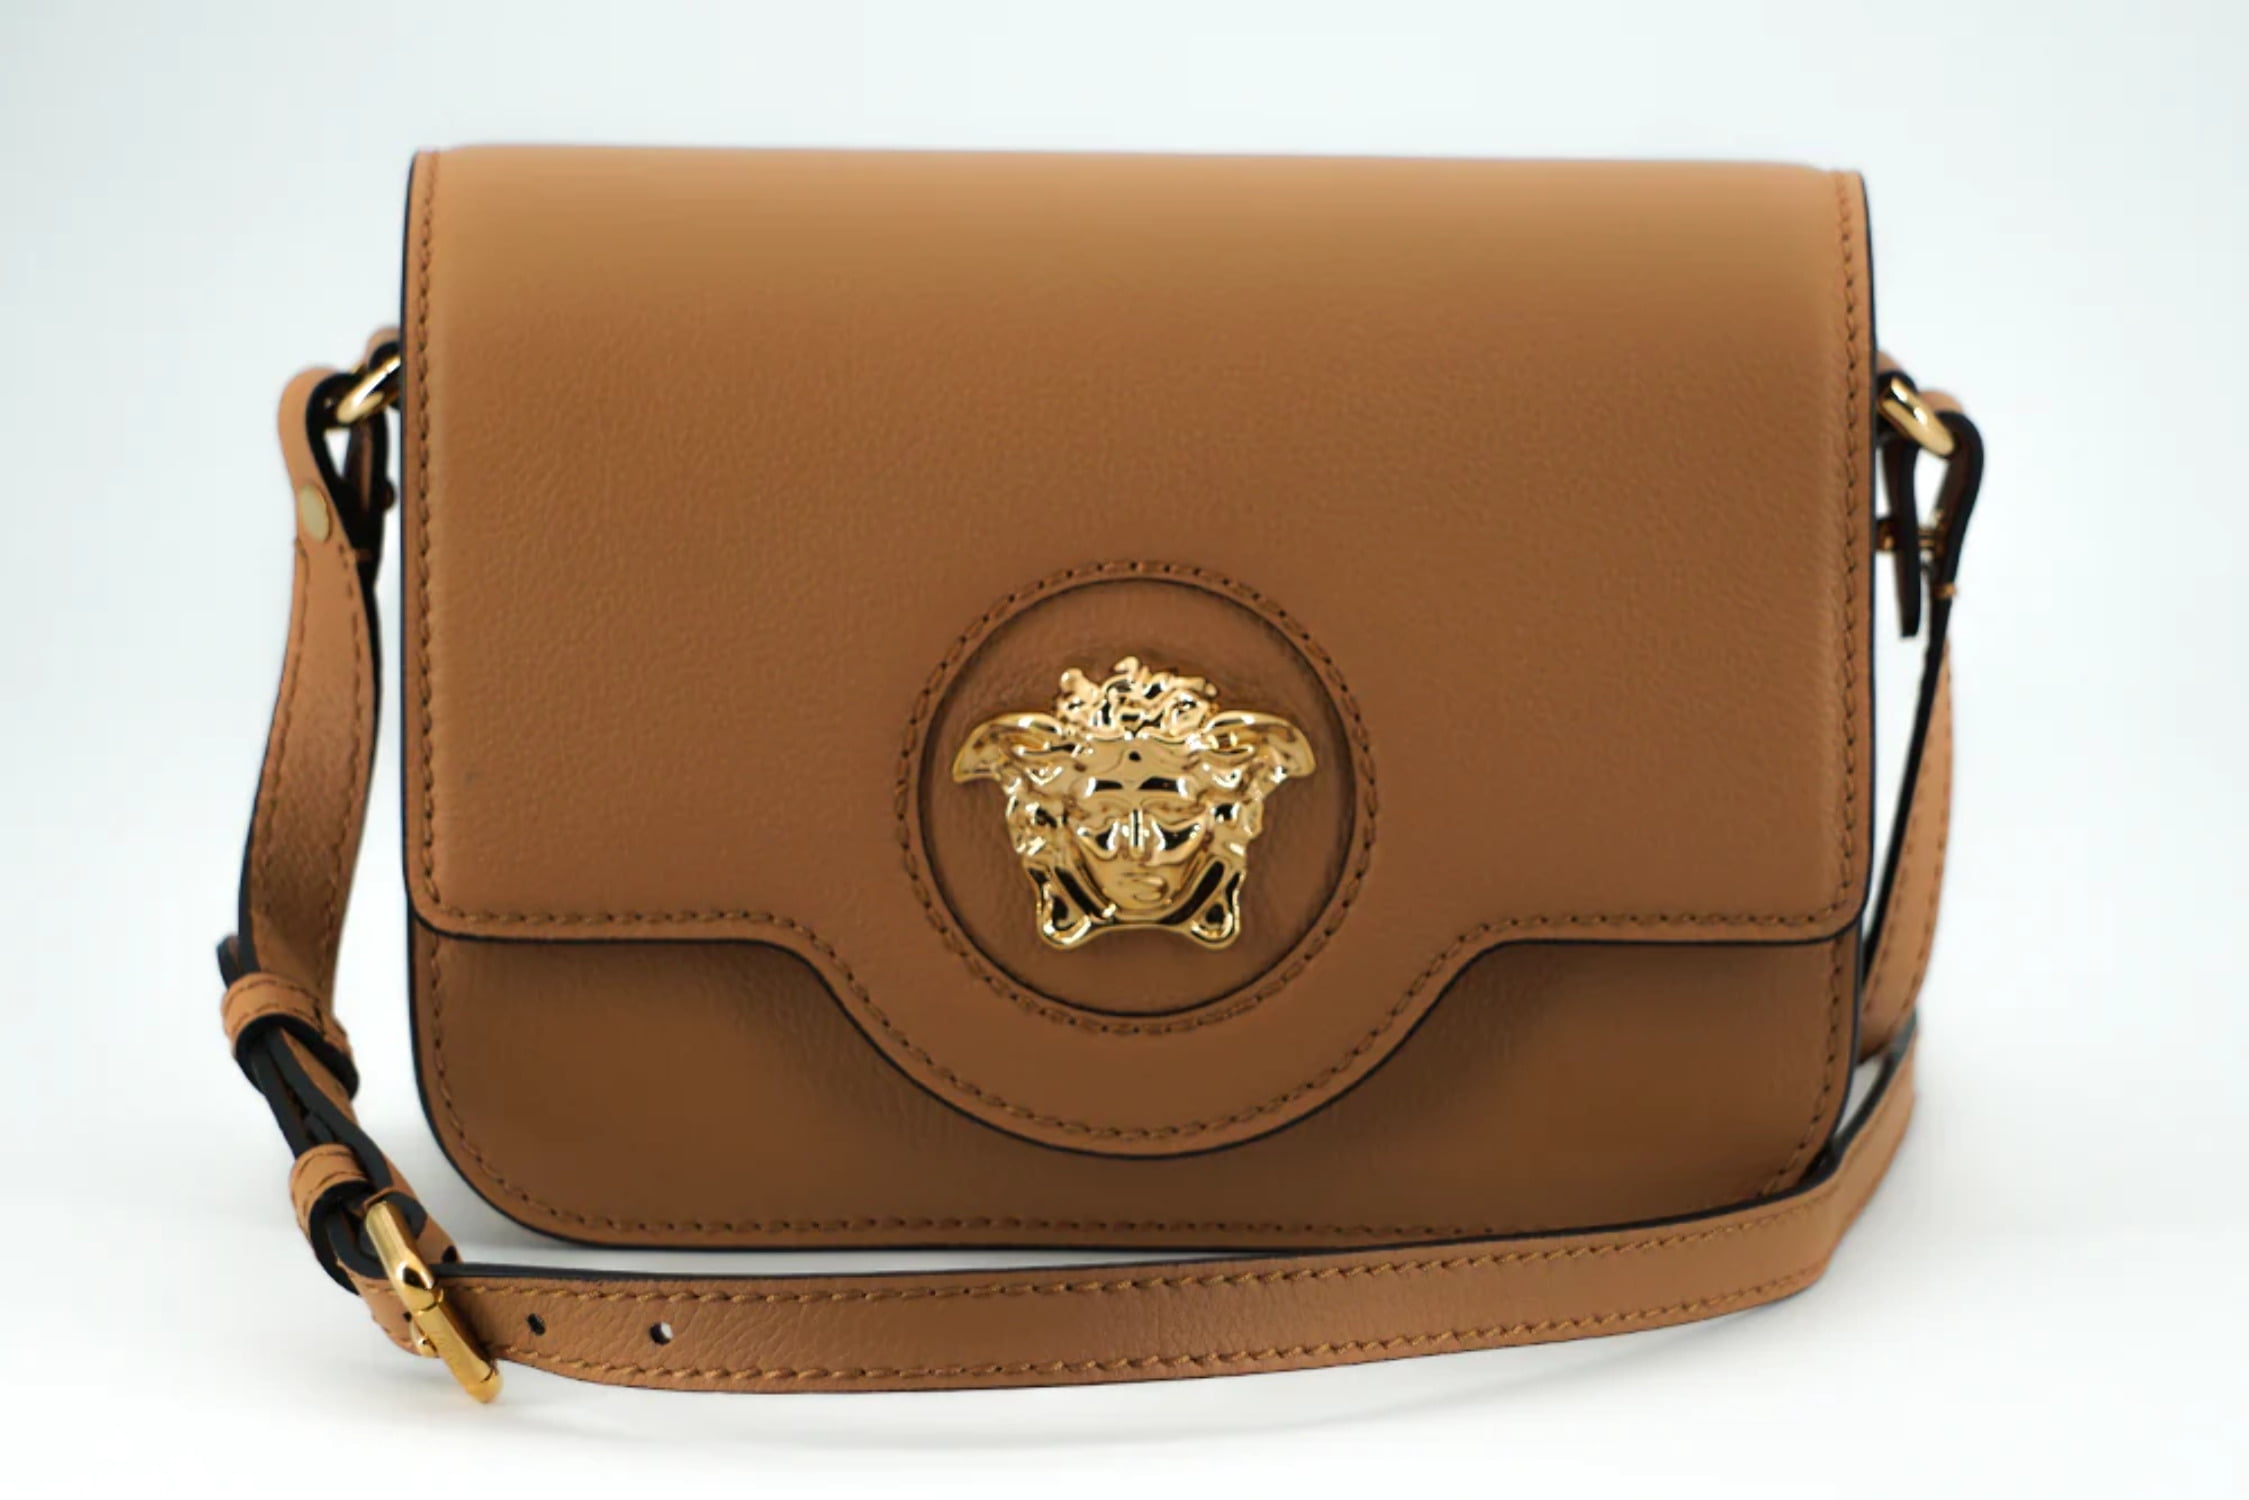 Versace Collection Real Genuine Leather Brown Handbag Purse w Shoulder Strap